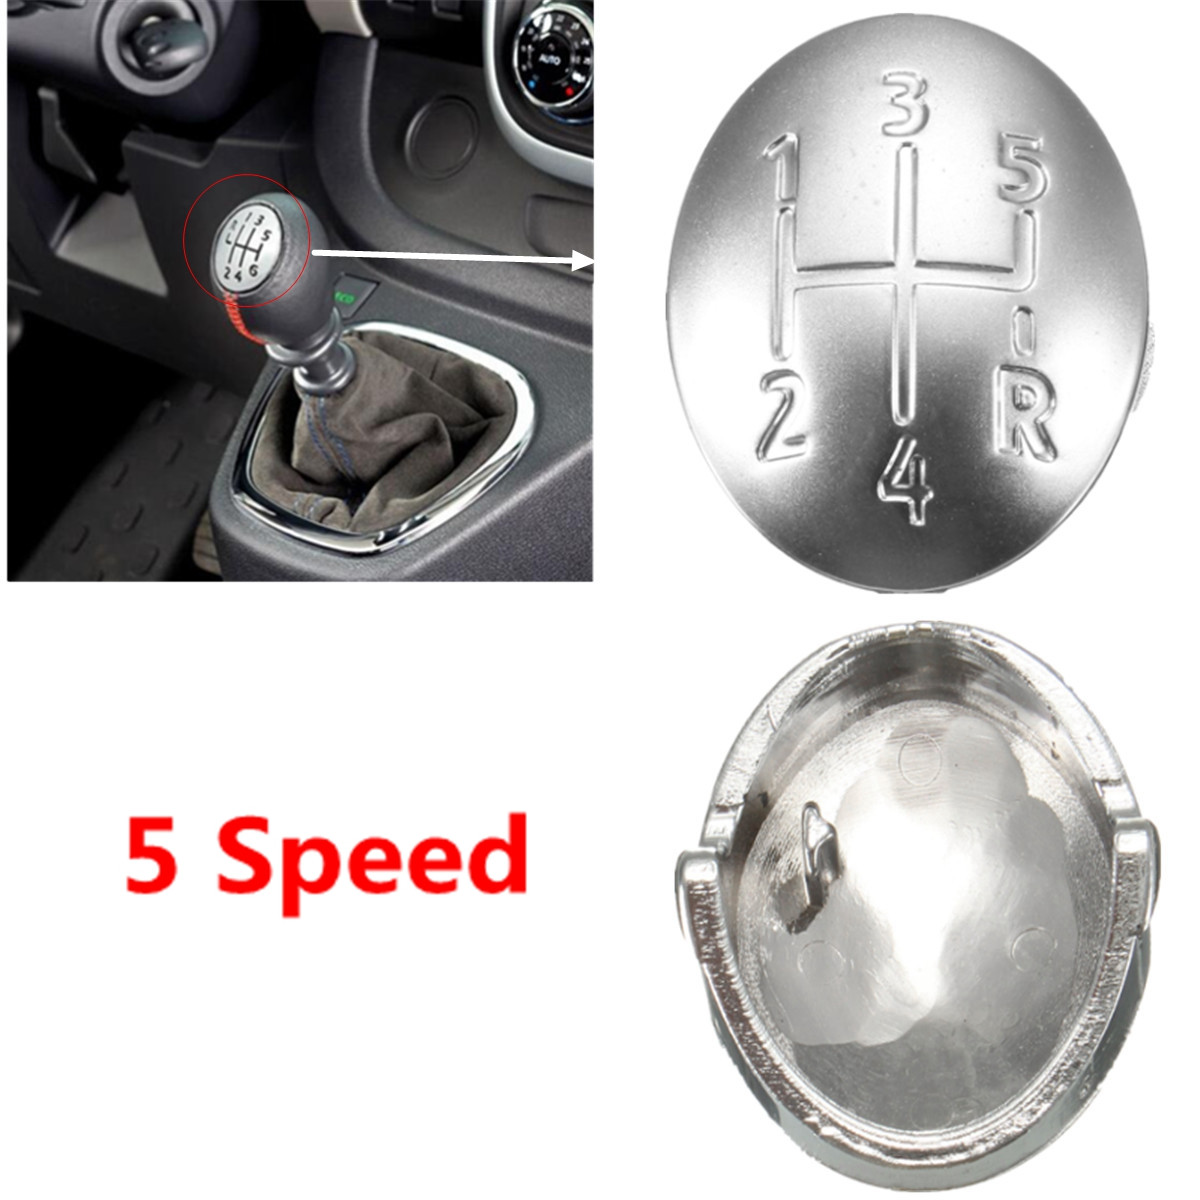 5 Speed Gear Shift Knob Cap Cover For Renault Clio Megane Scenic Twingo Chrome